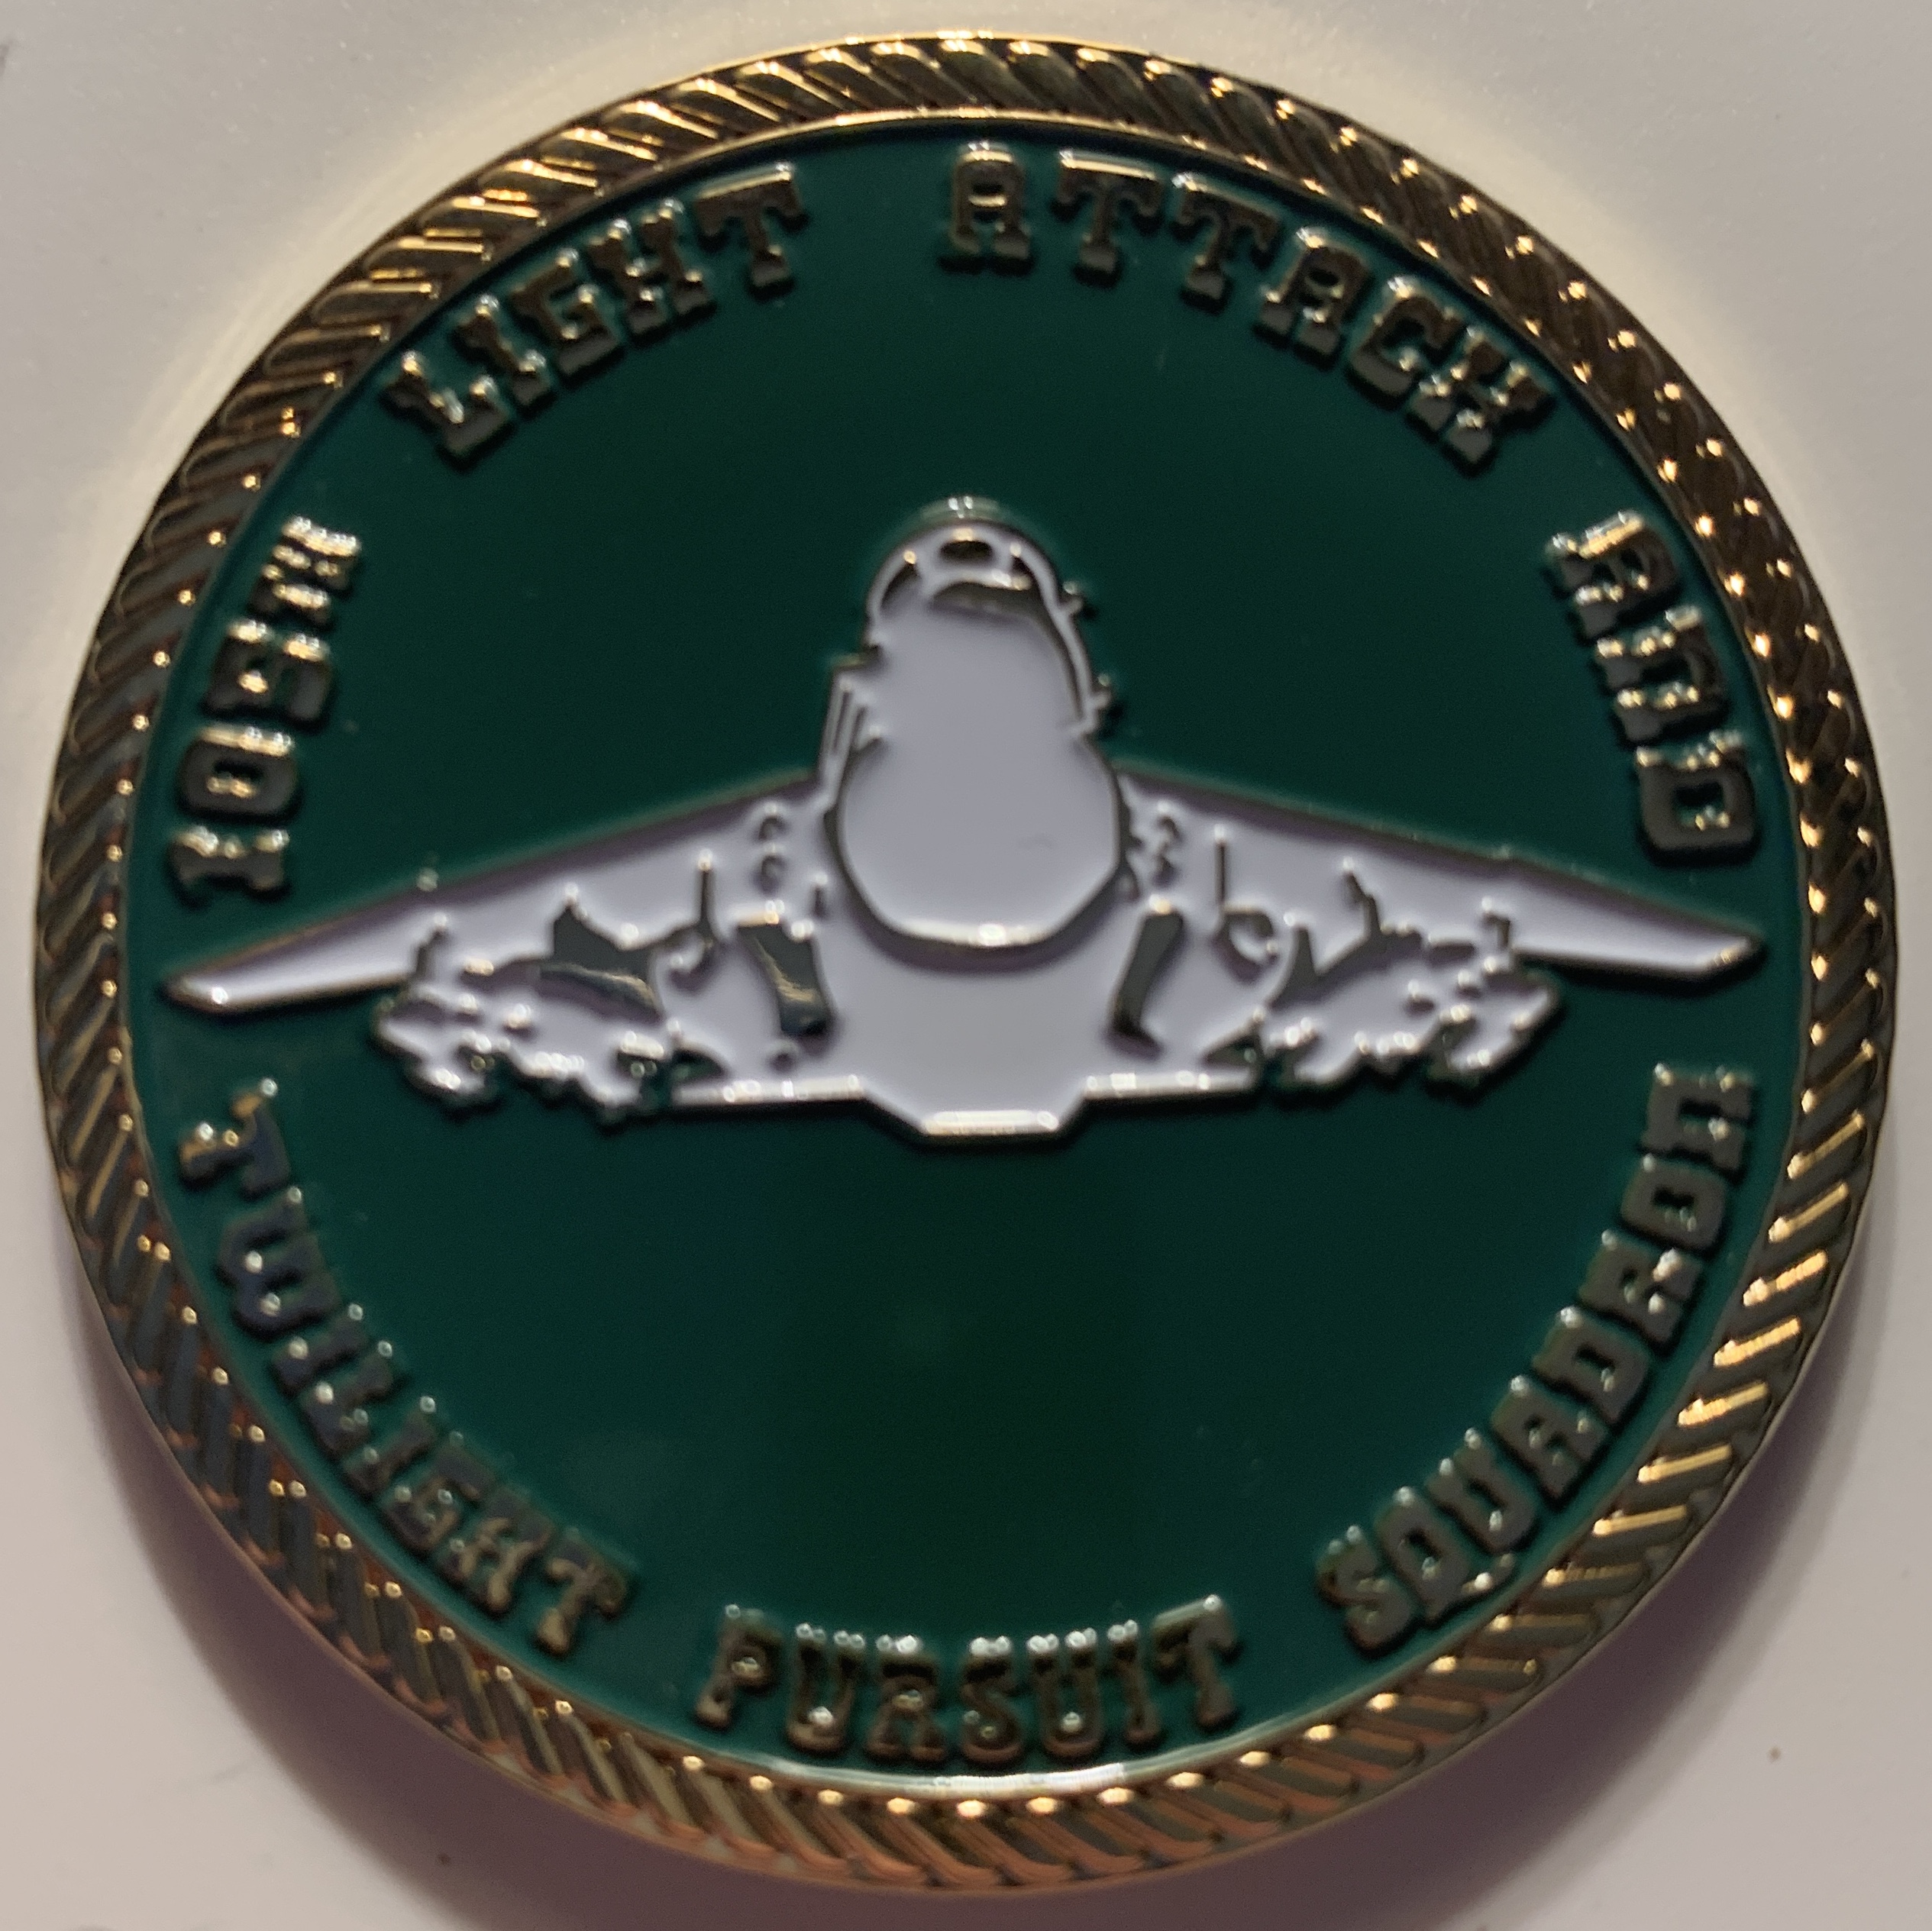 A-7E / VA-105 'GUNSLINGERS' Coin (Back)